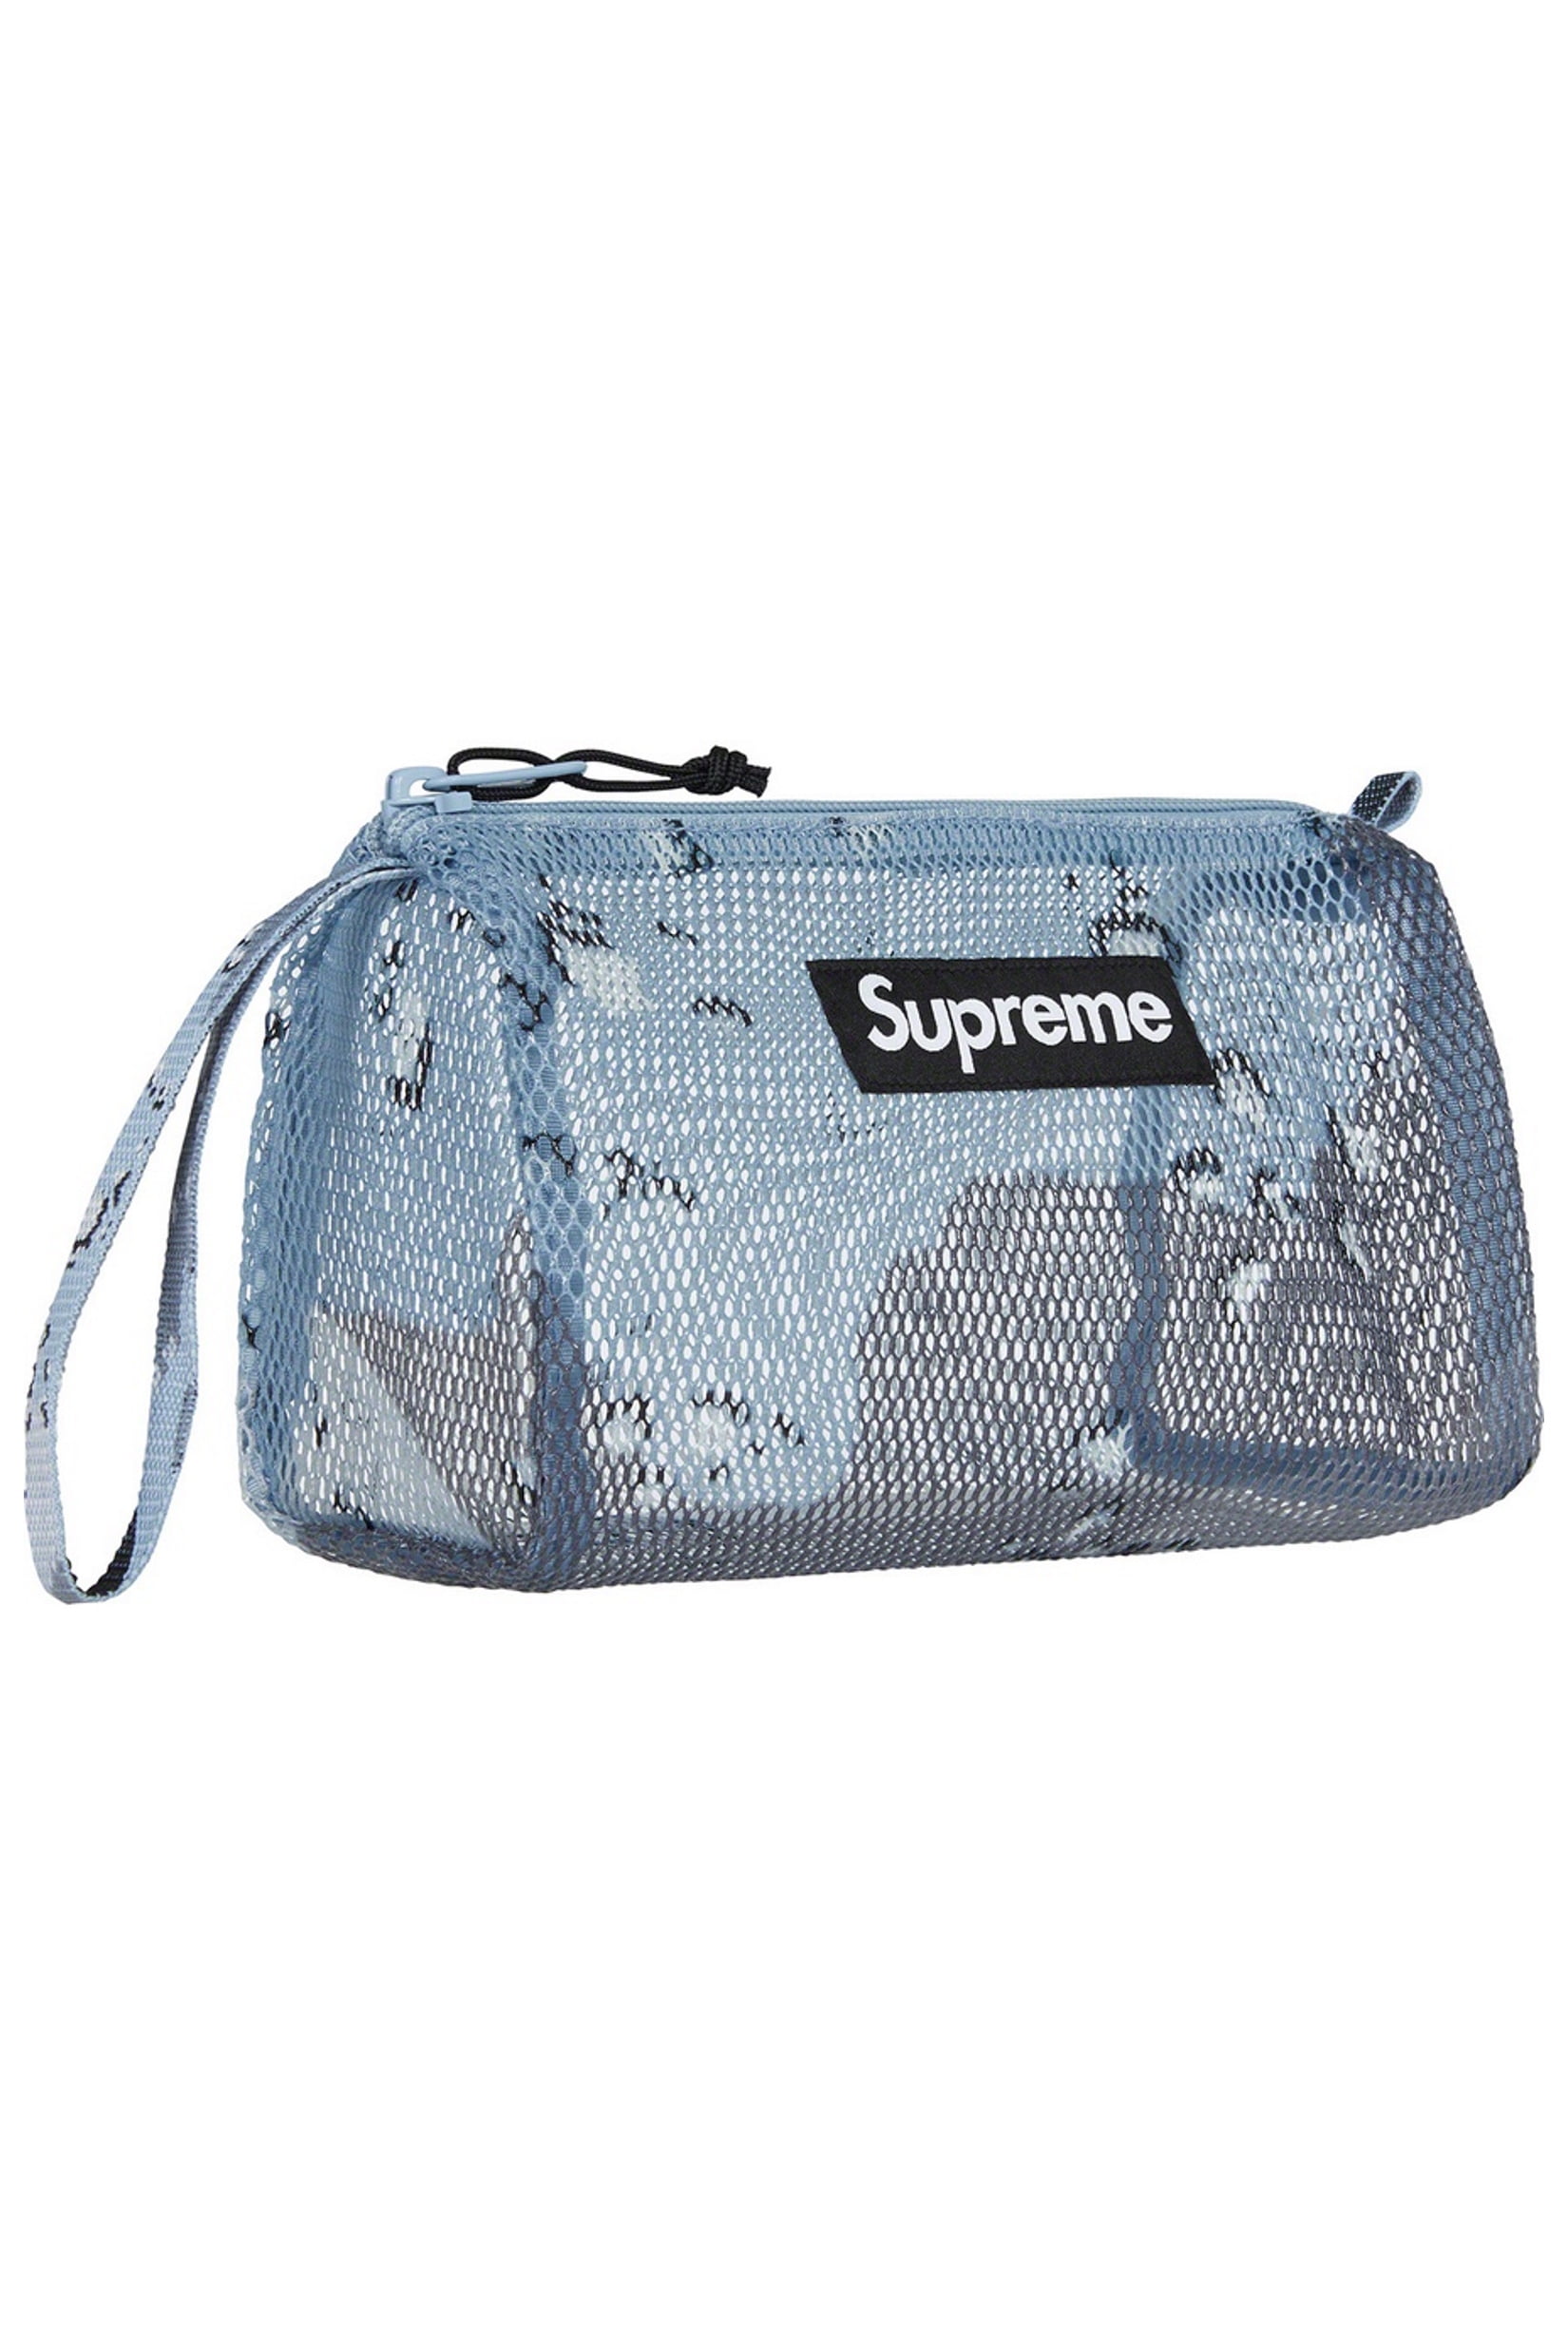 supreme utility pouch blue